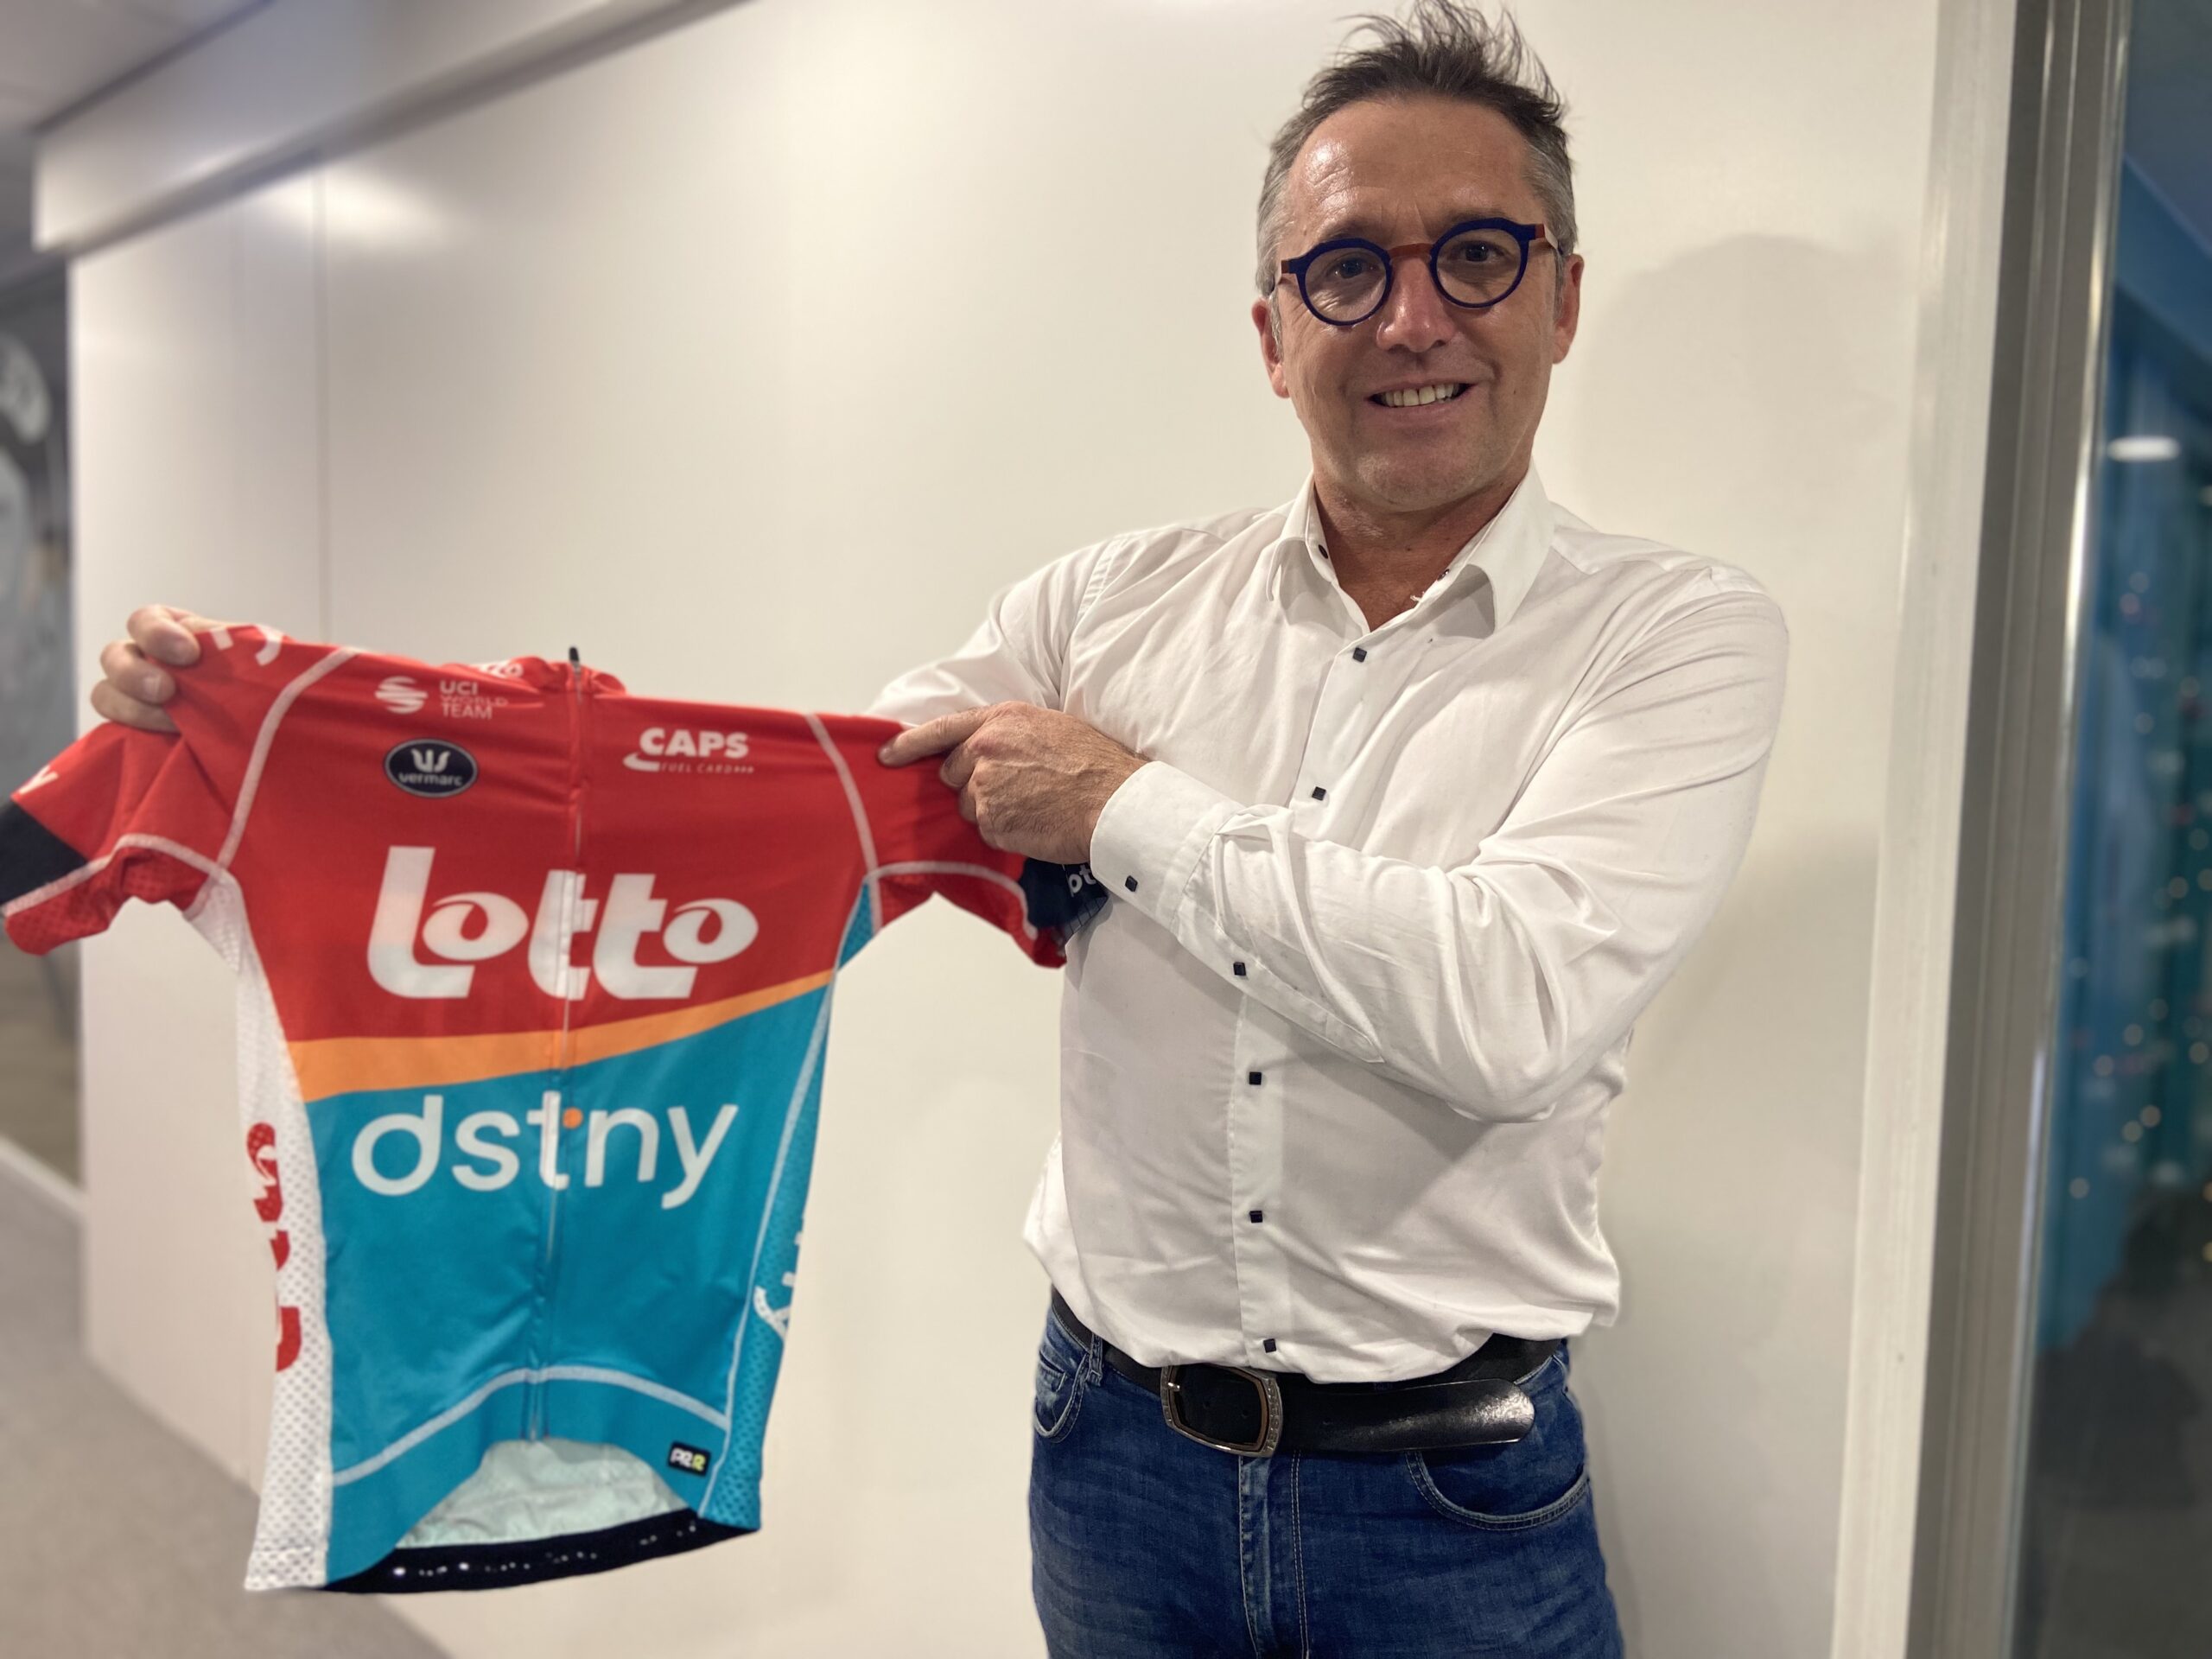 Stephane Heulot na czele Lotto Dstny